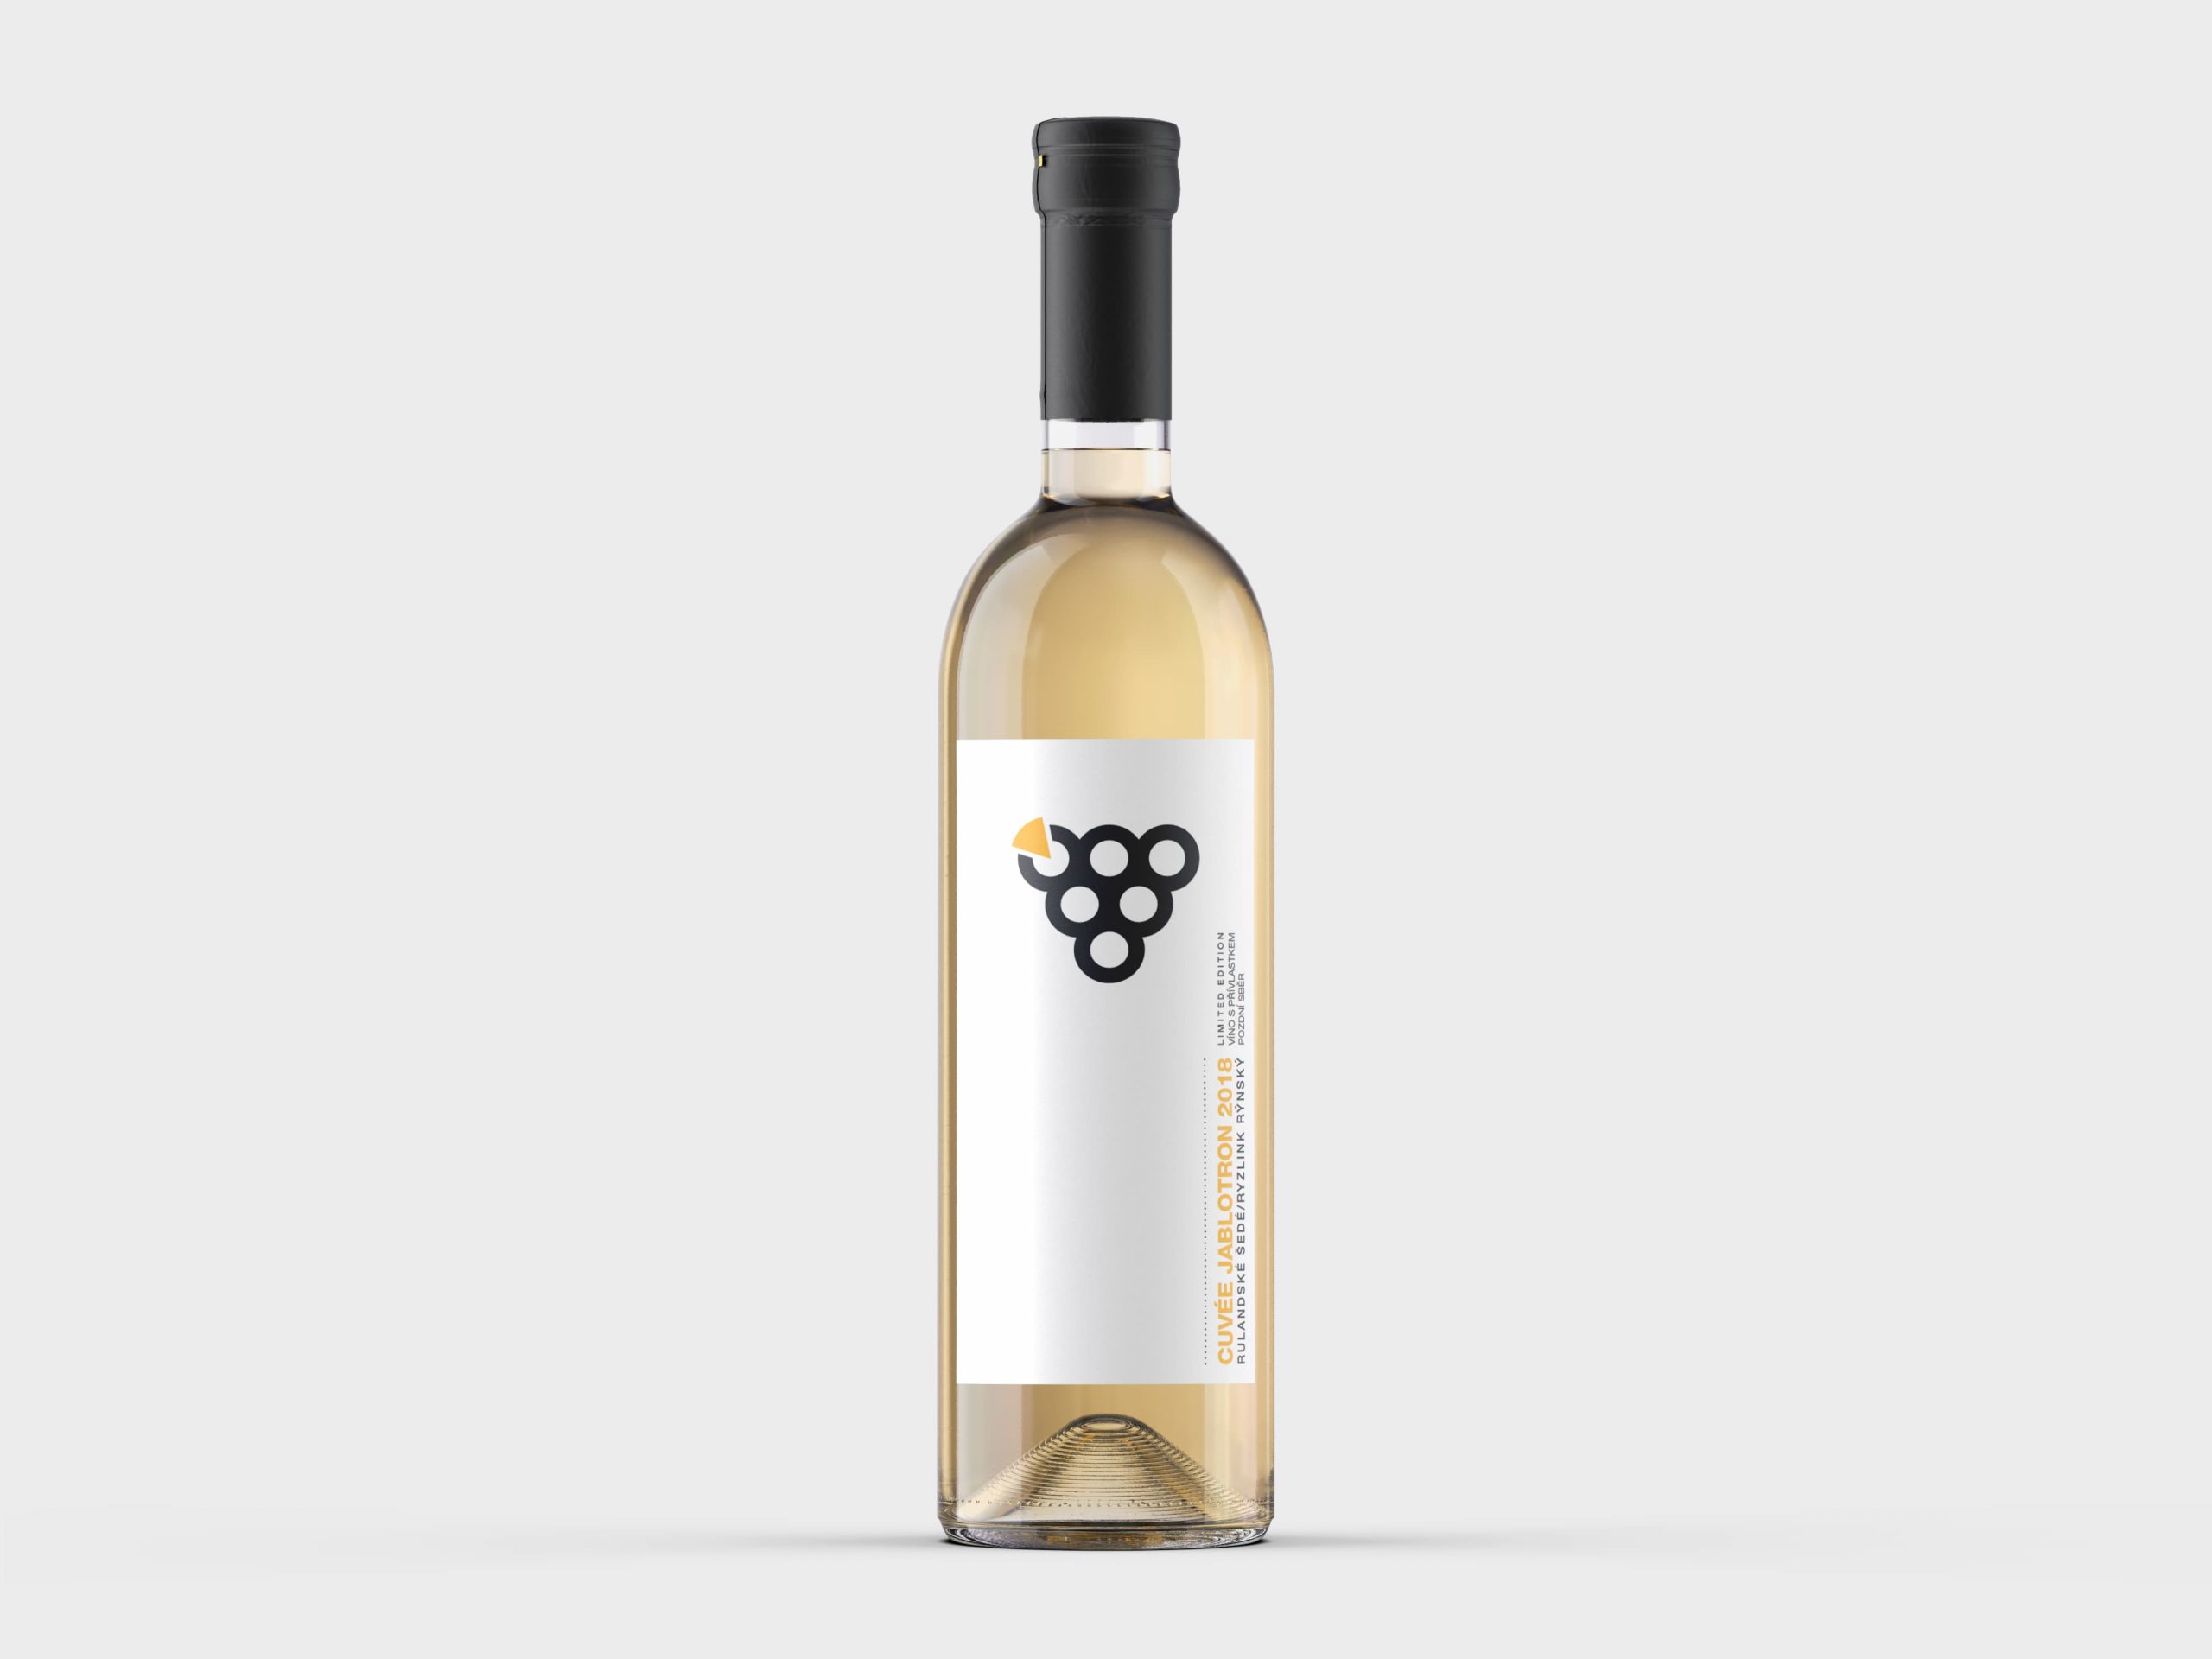 Jablotron – design vína